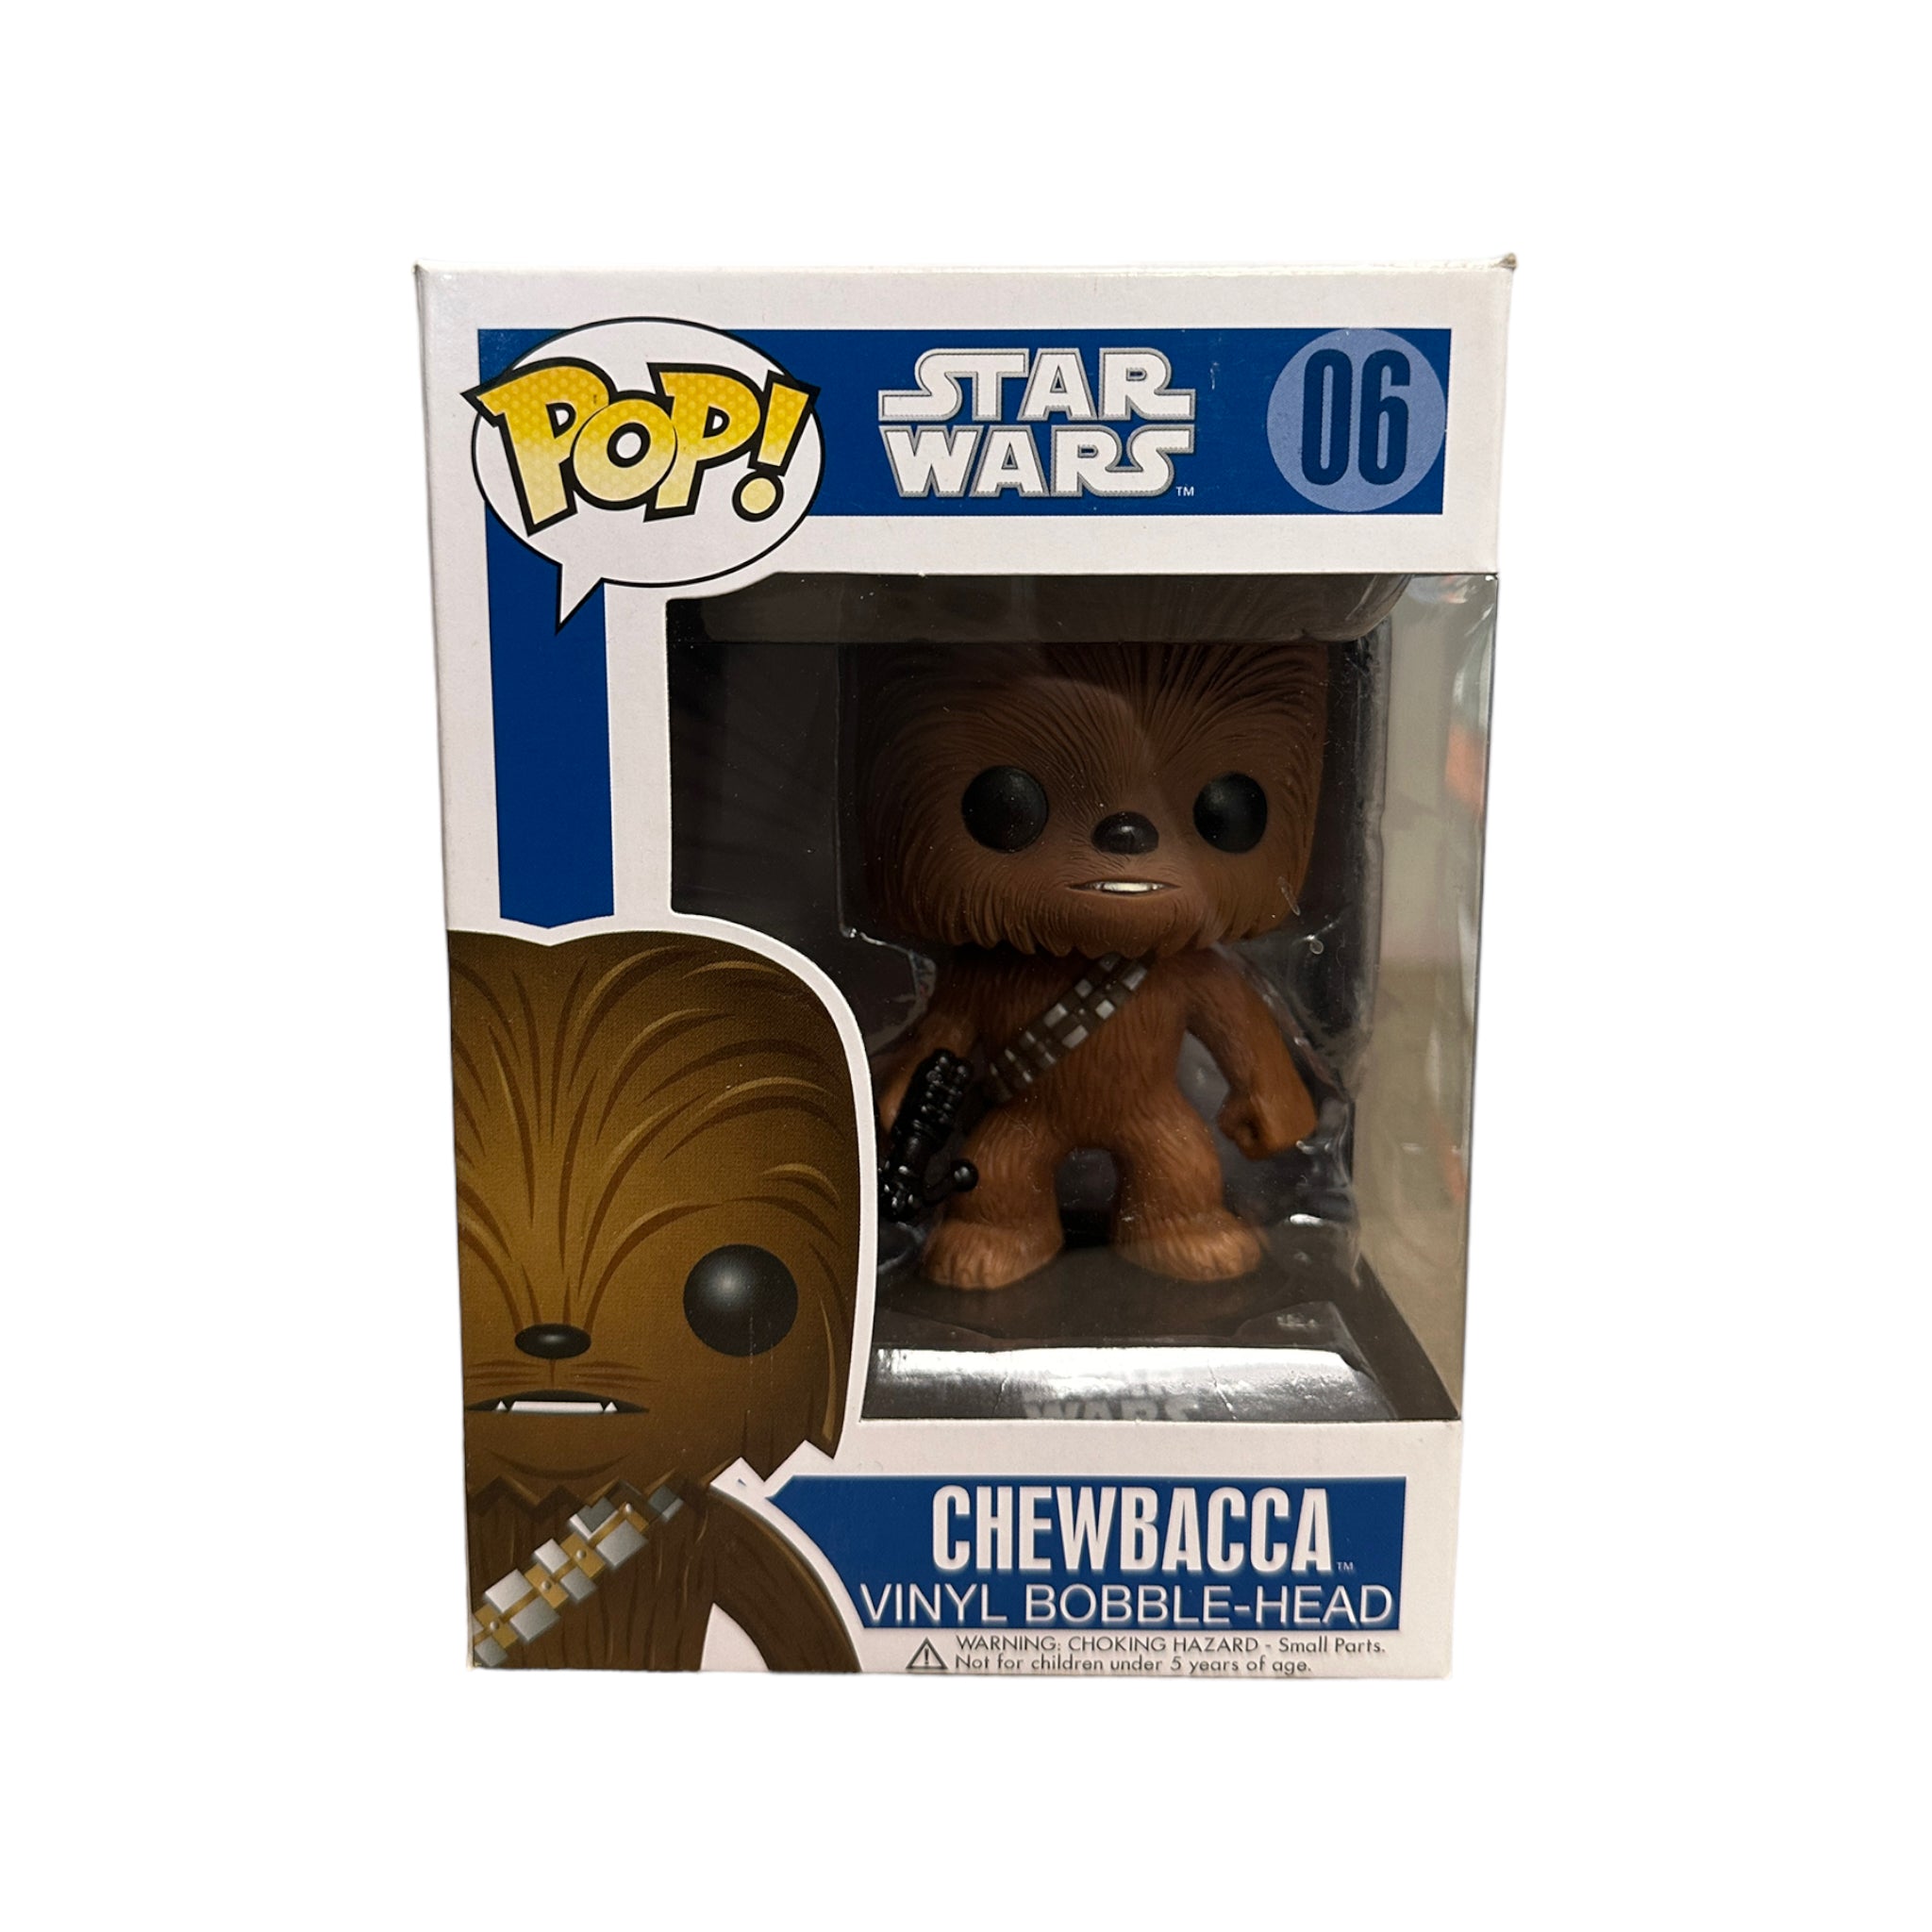 Chewbacca #06 (Large Writing) Funko Pop! - Star Wars - 2012 Pop! - Condition 7.5/10